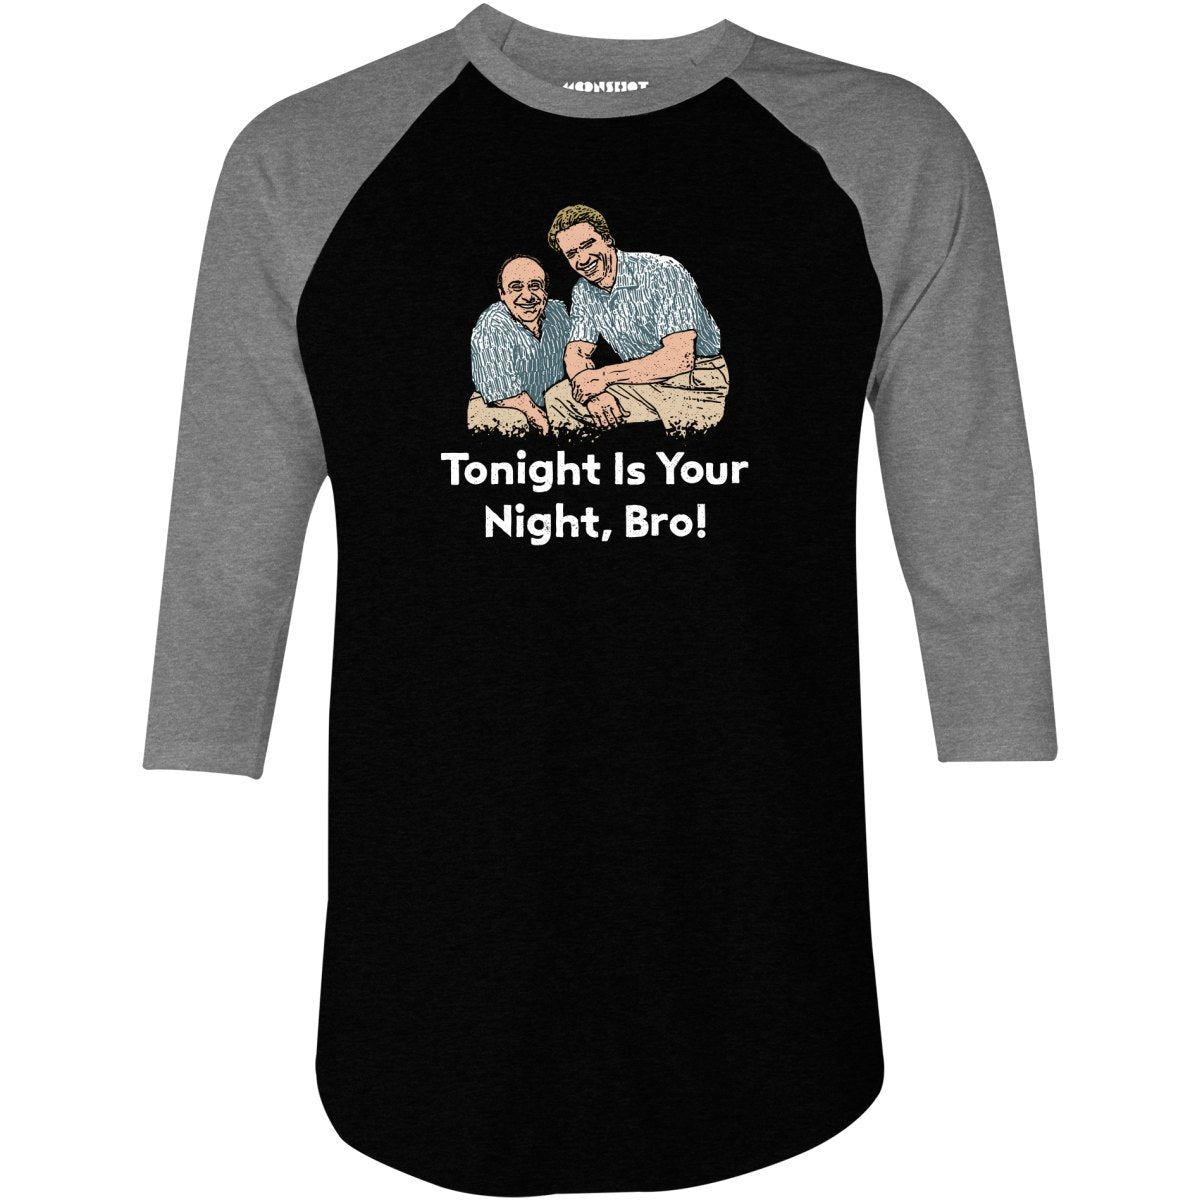 Tonight is Your Night, Bro! - 3/4 Sleeve Raglan T-Shirt